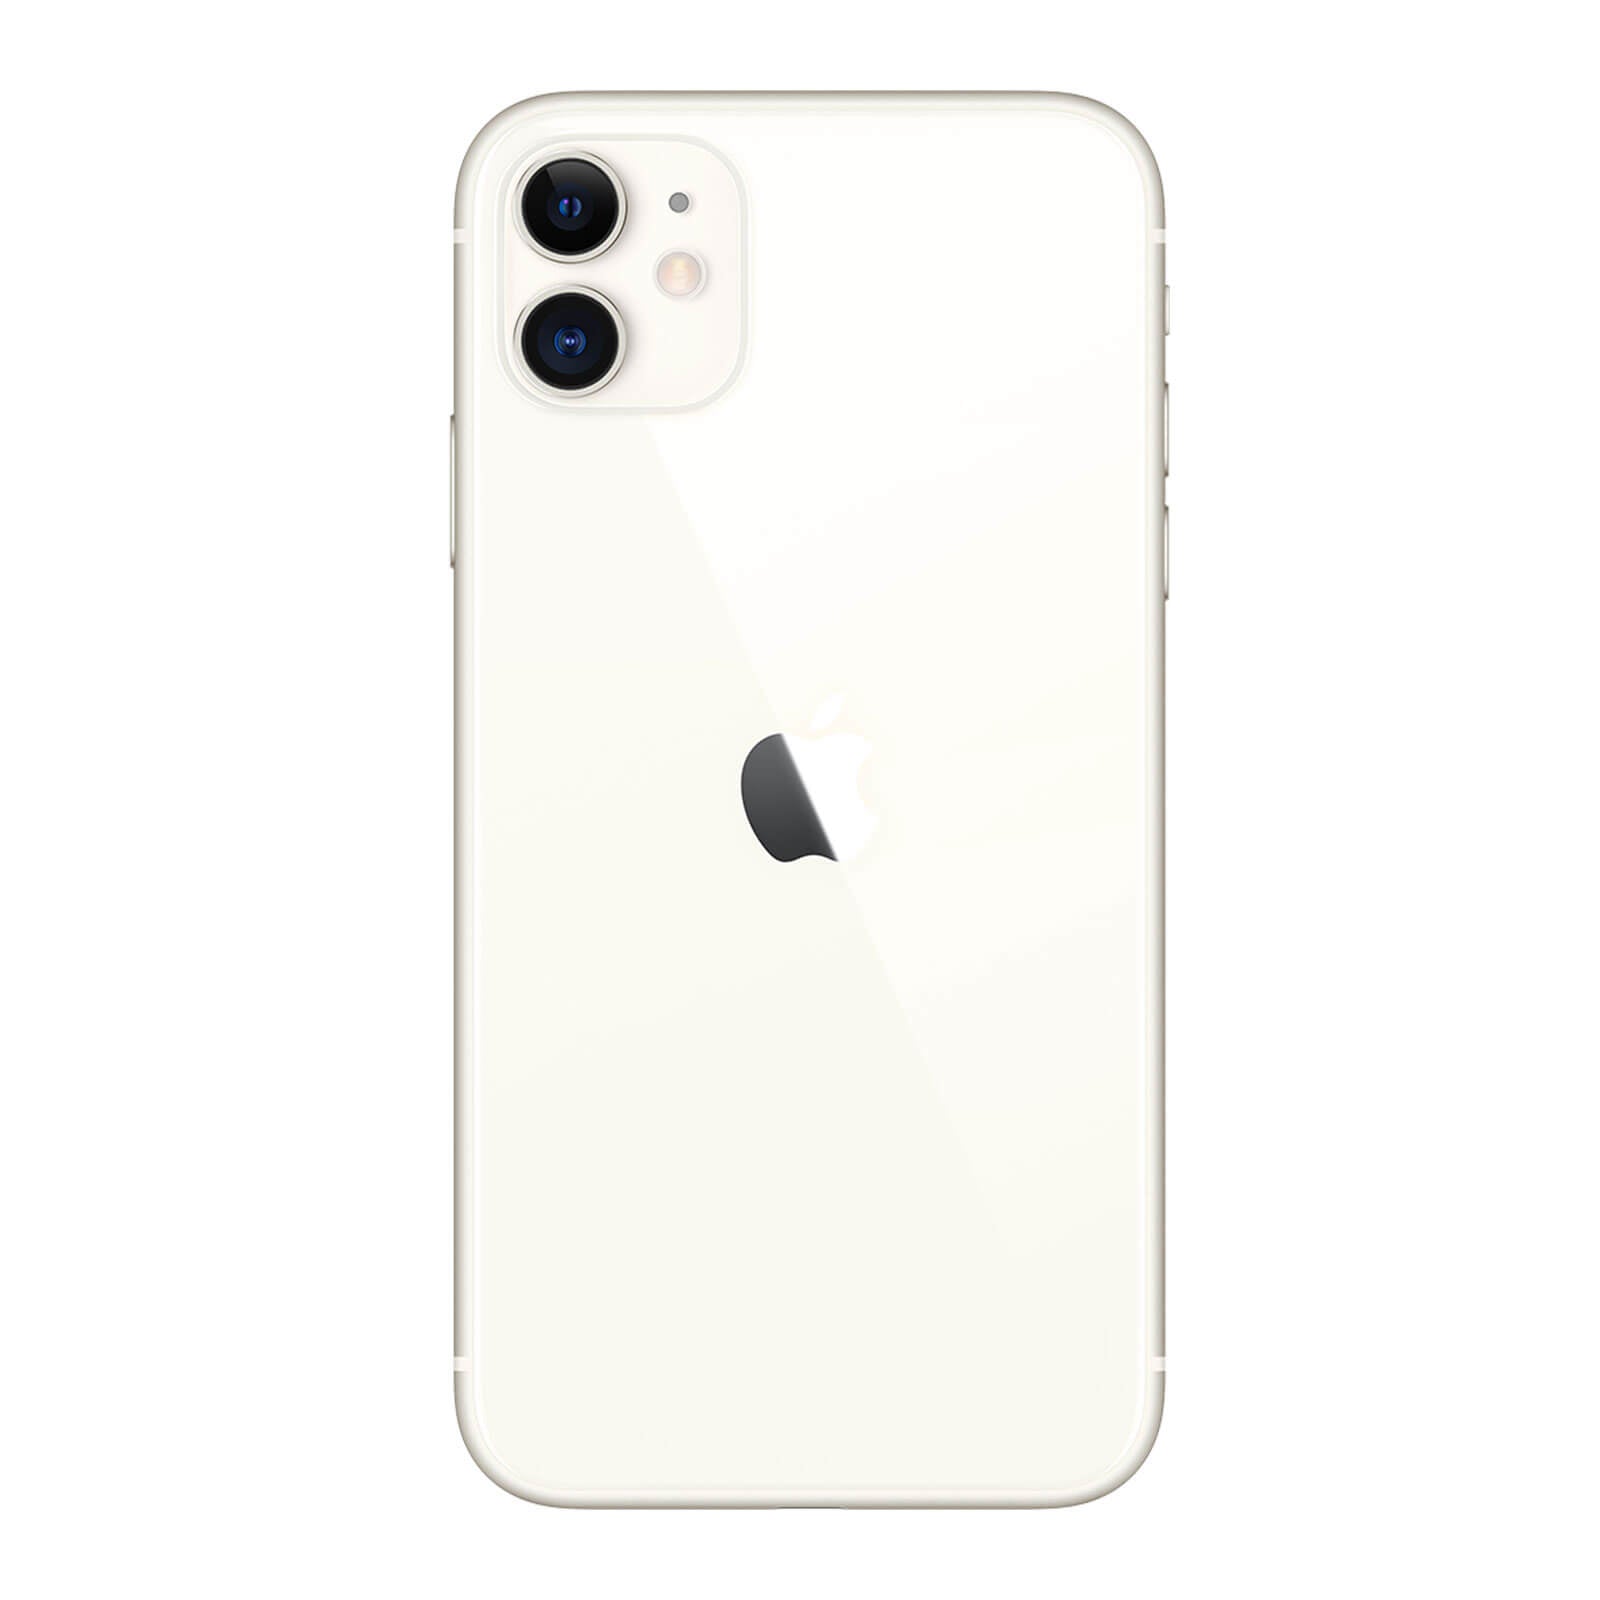 Apple iPhone 11 64GB White Very Good - Sprint